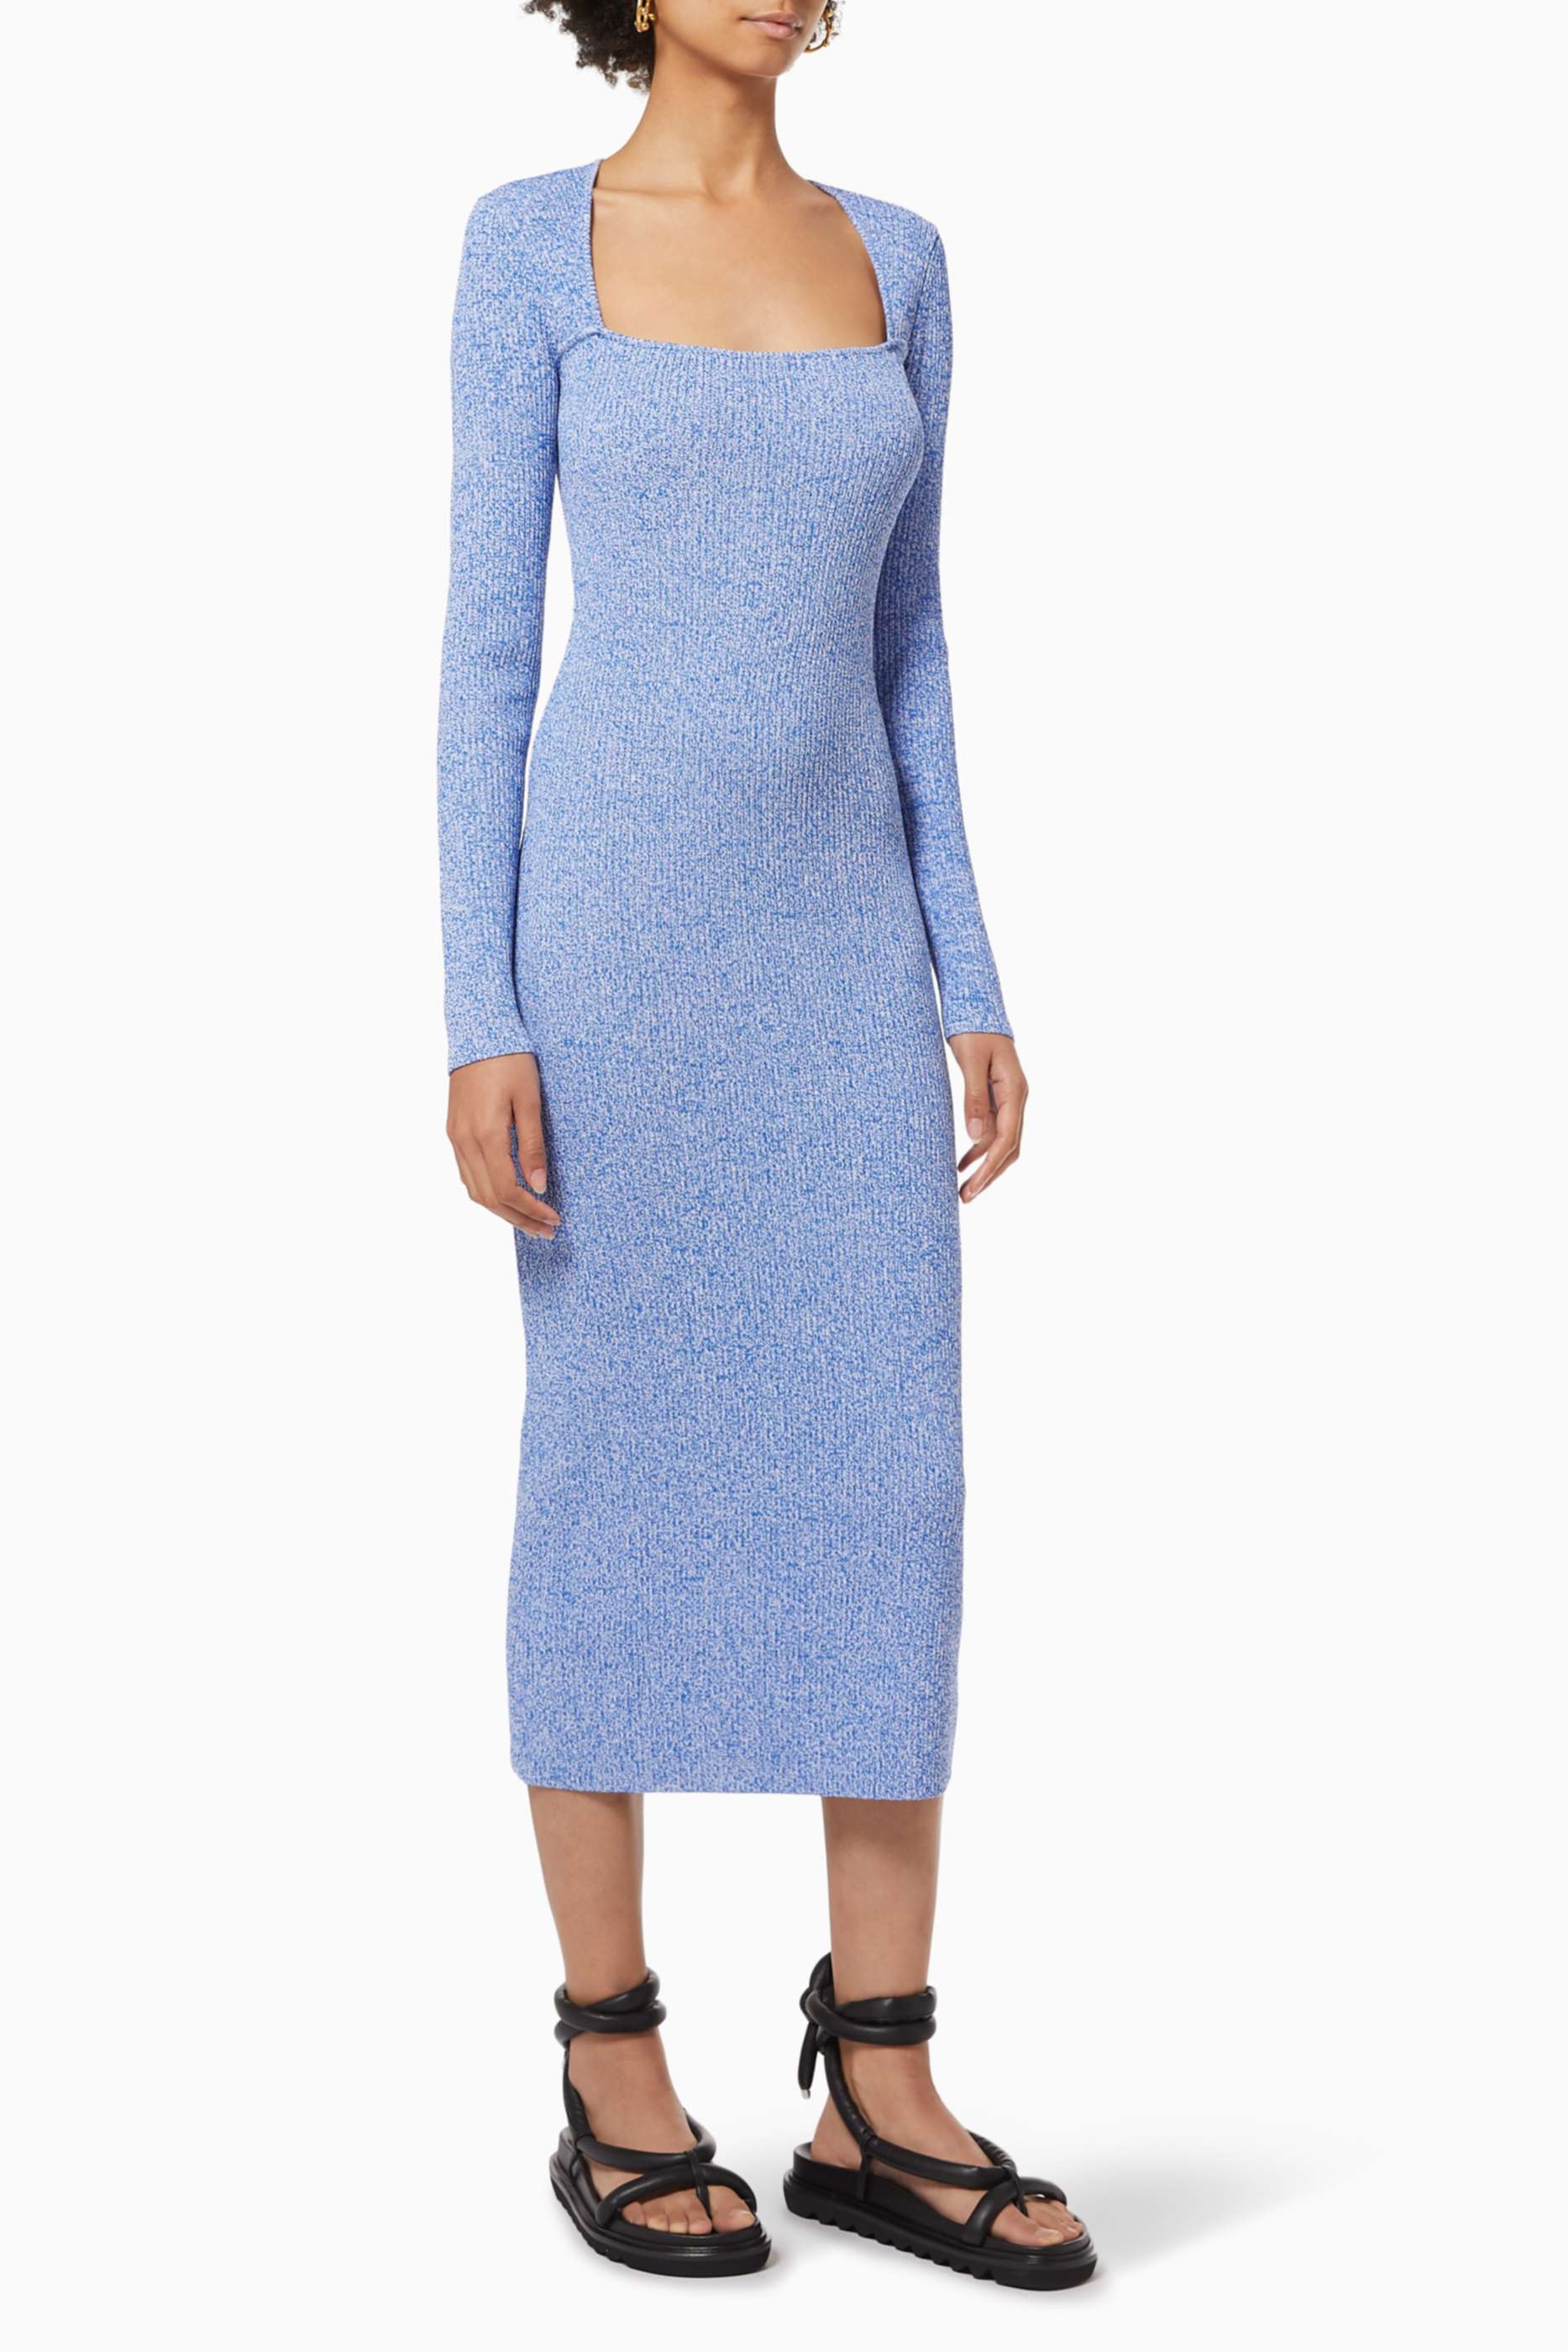 Shop Ganni Blue Fitted Midi Dress in ...